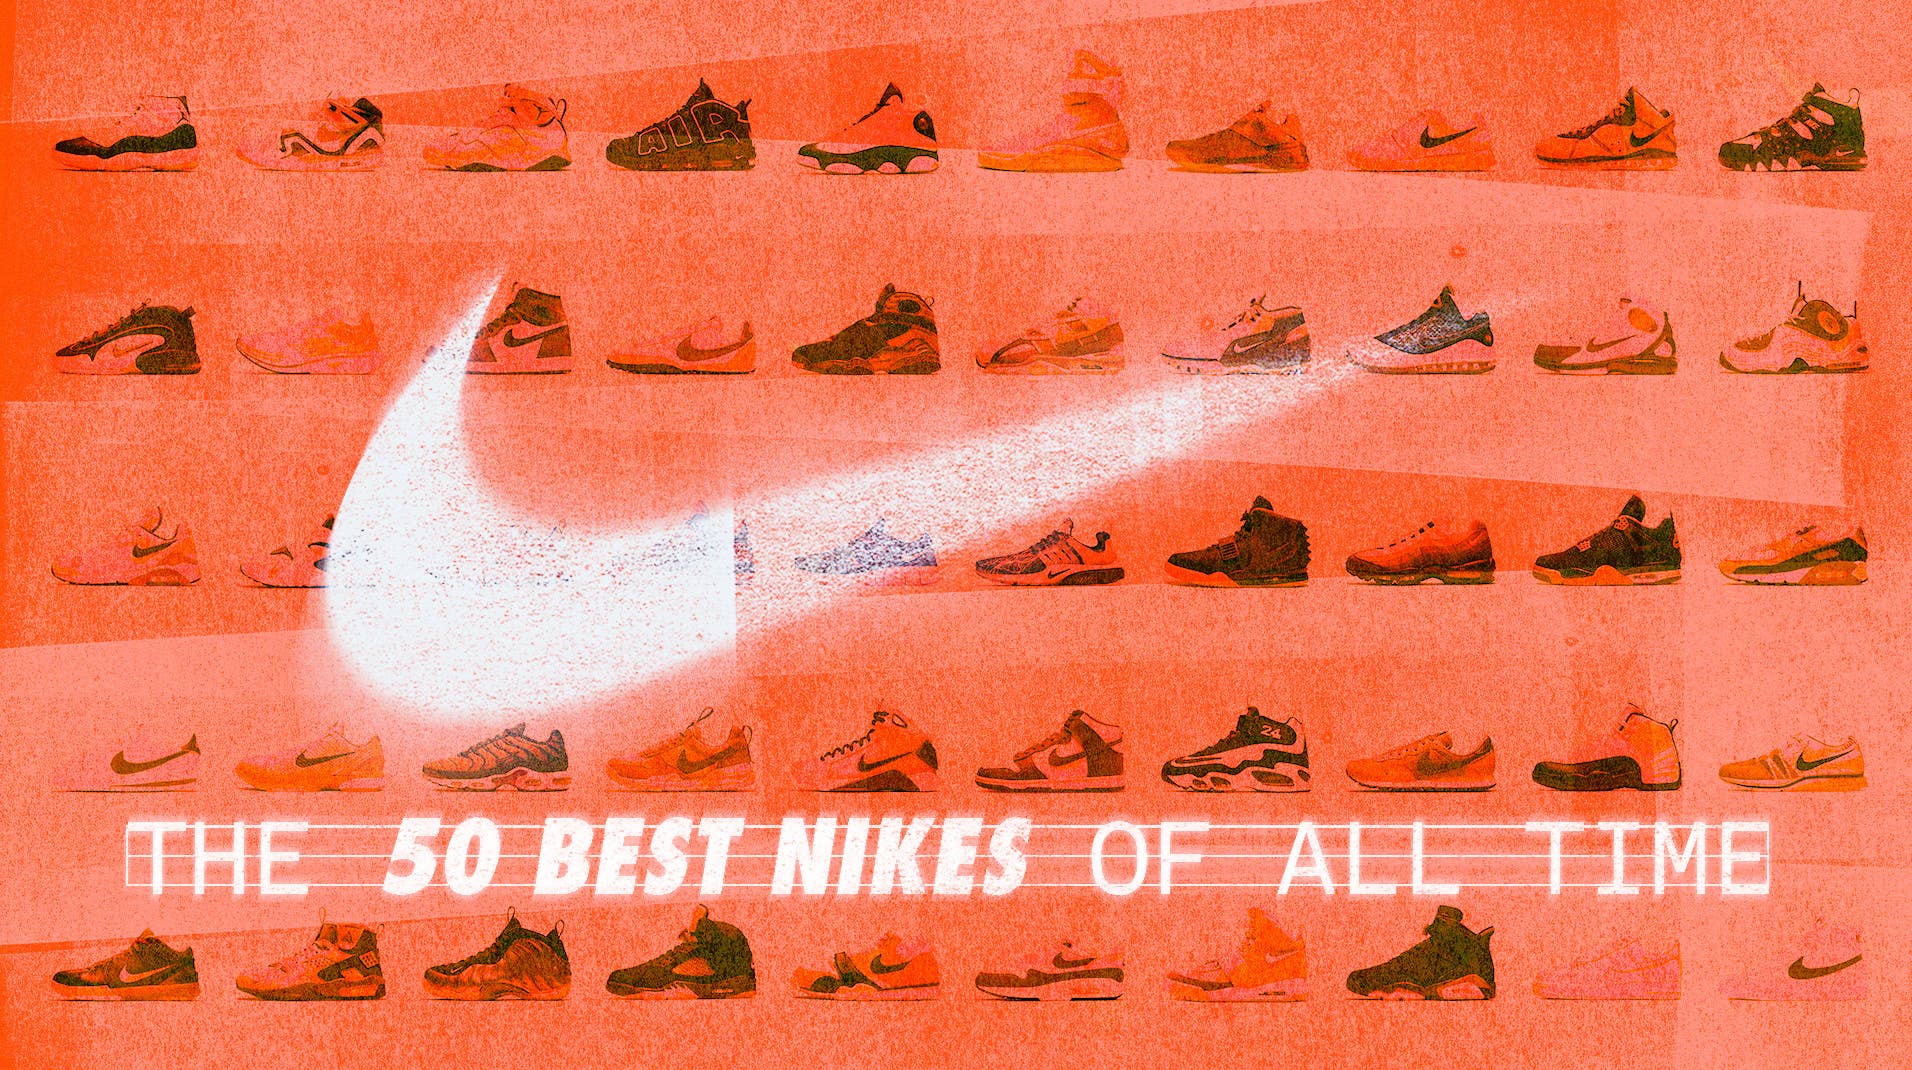 Desgracia Pertenece arco The 50 Best Nikes of All Time | Complex